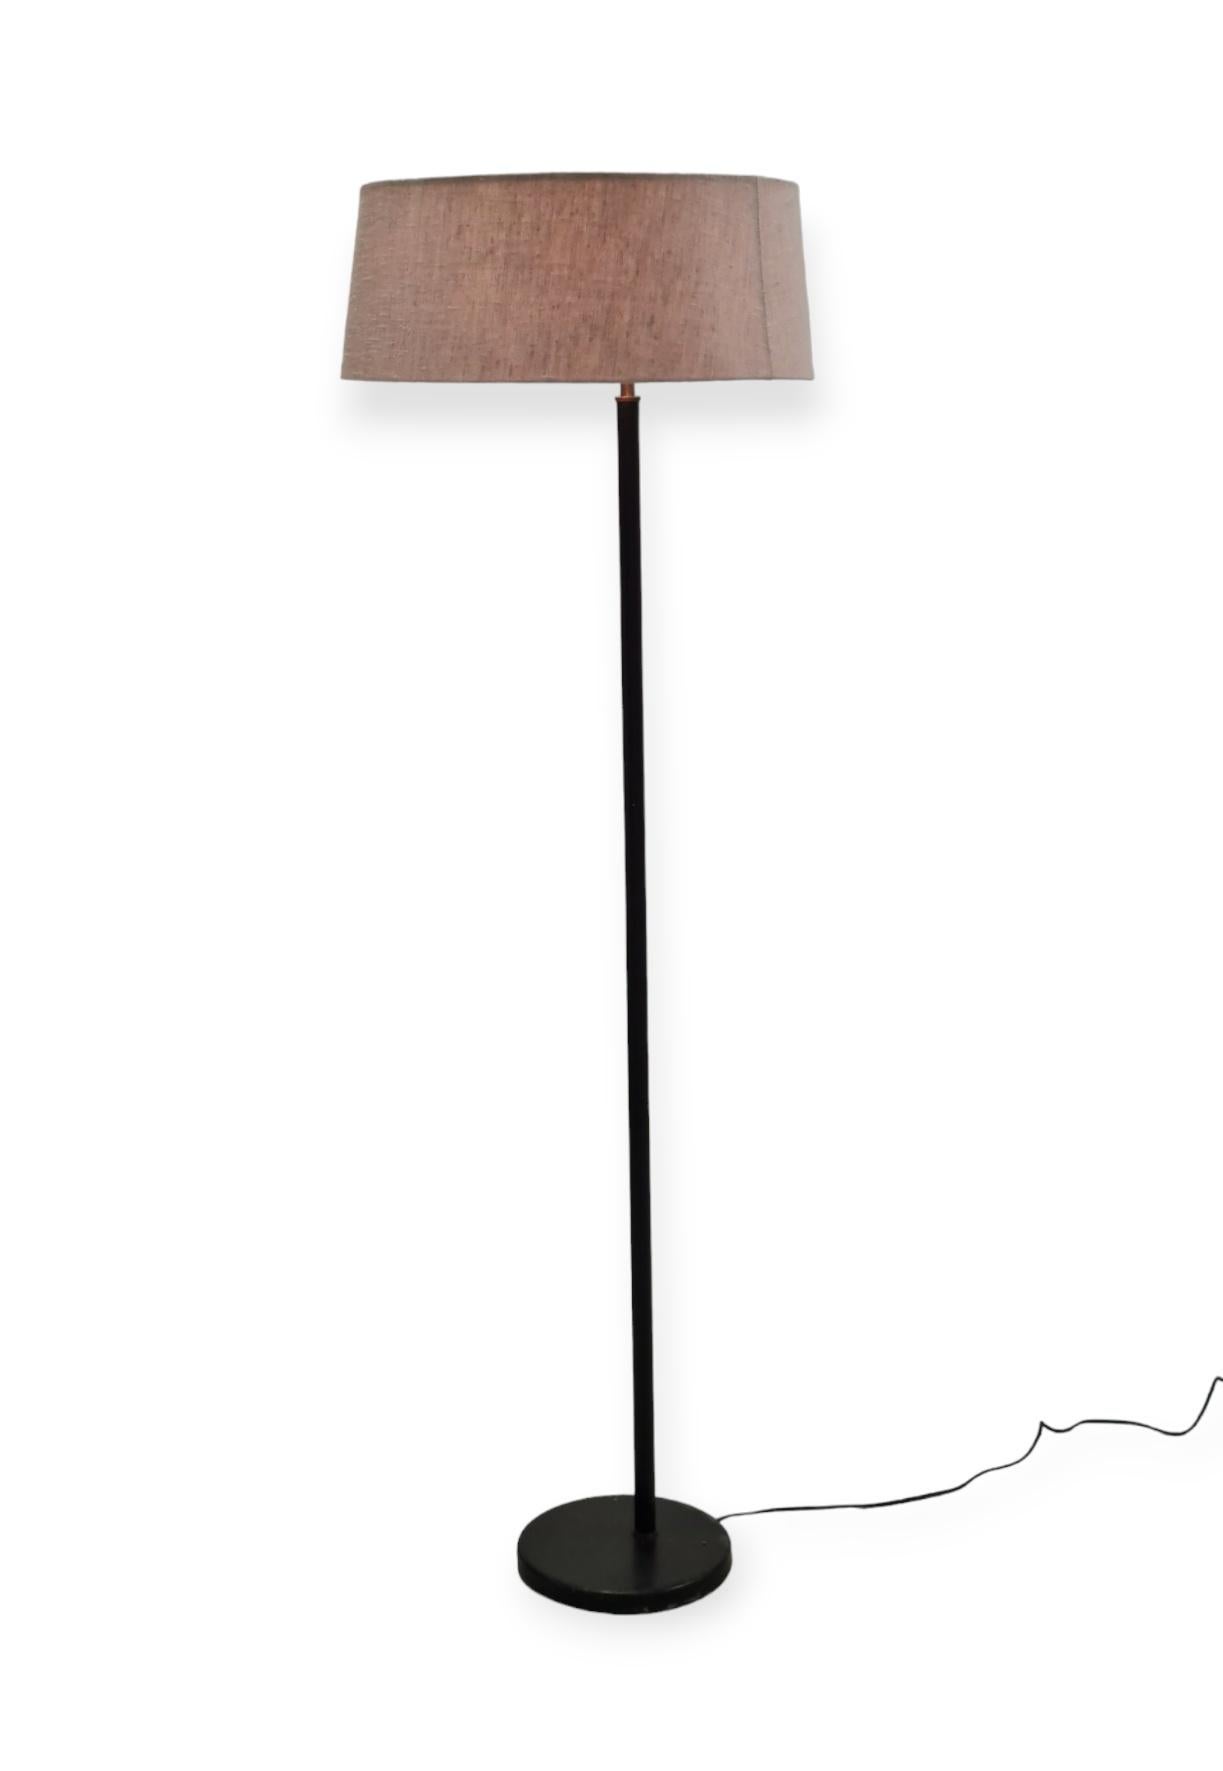 Maija Heikinheimo Floor Lamp MH801, Valaistustyö for Artek 1950s For Sale 4